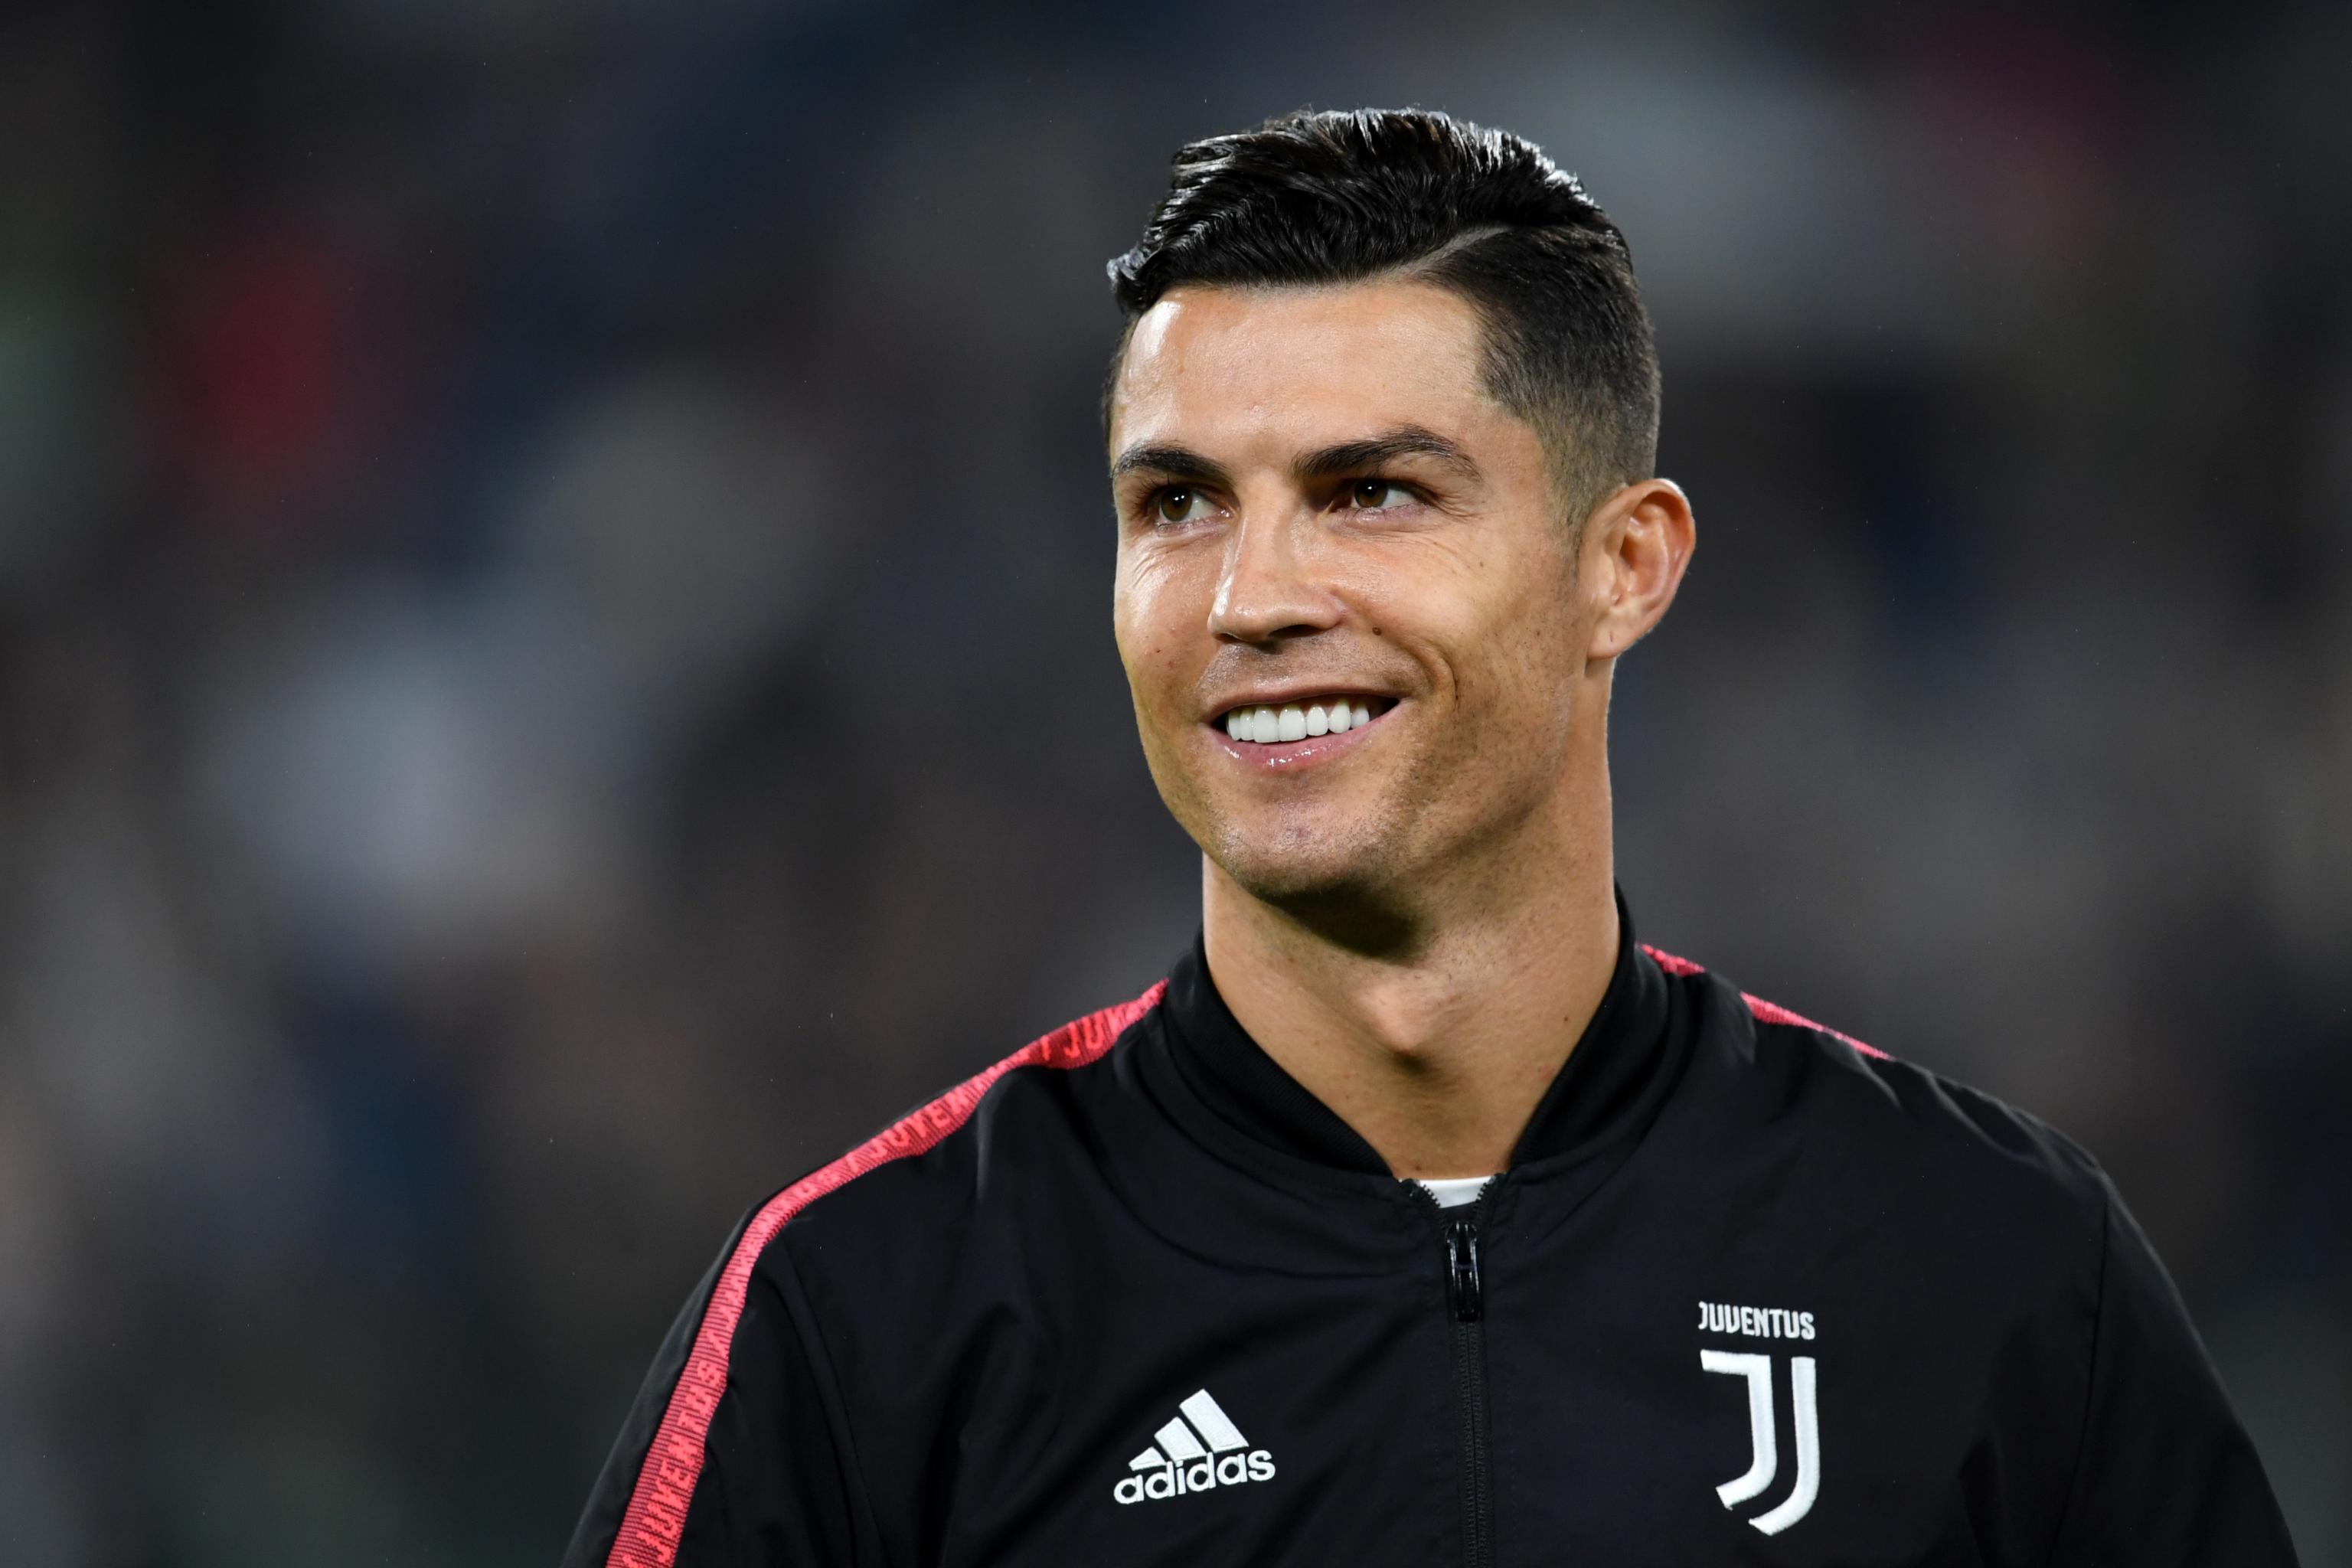 Juventus Crest Juventus stars adidas kit crest appear three gold unveil
champions deal kits italian start six season